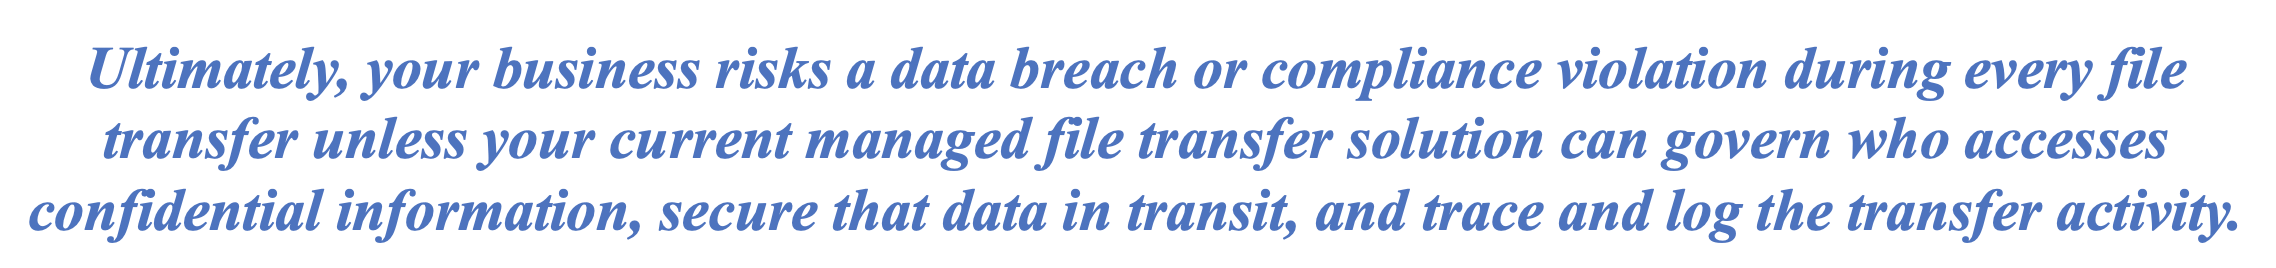 Modern Secure Managed File Transfer Solution